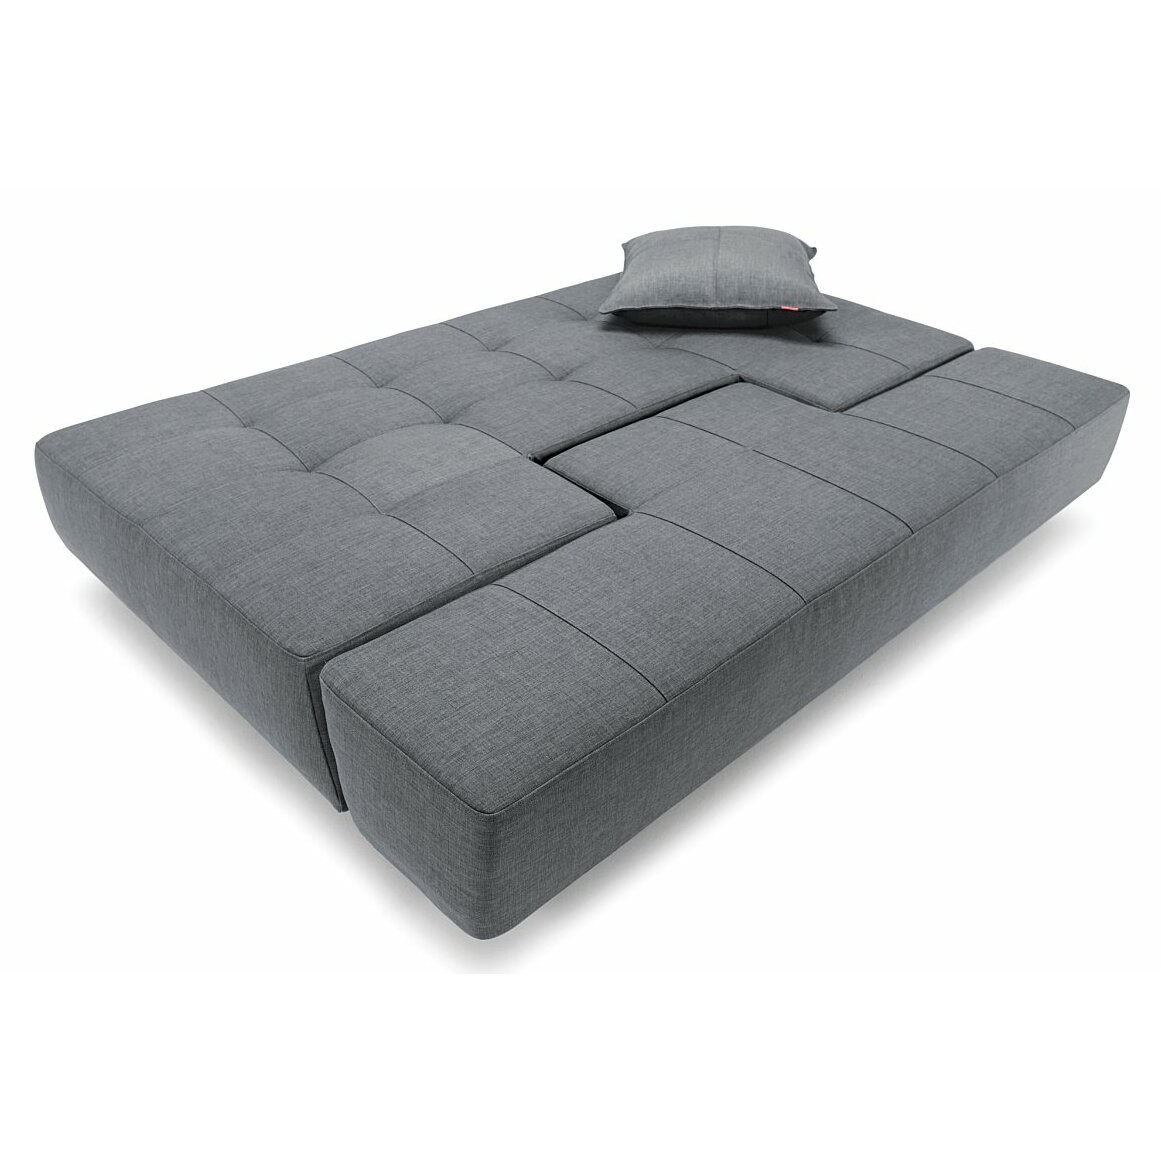 Fold down sofa bed